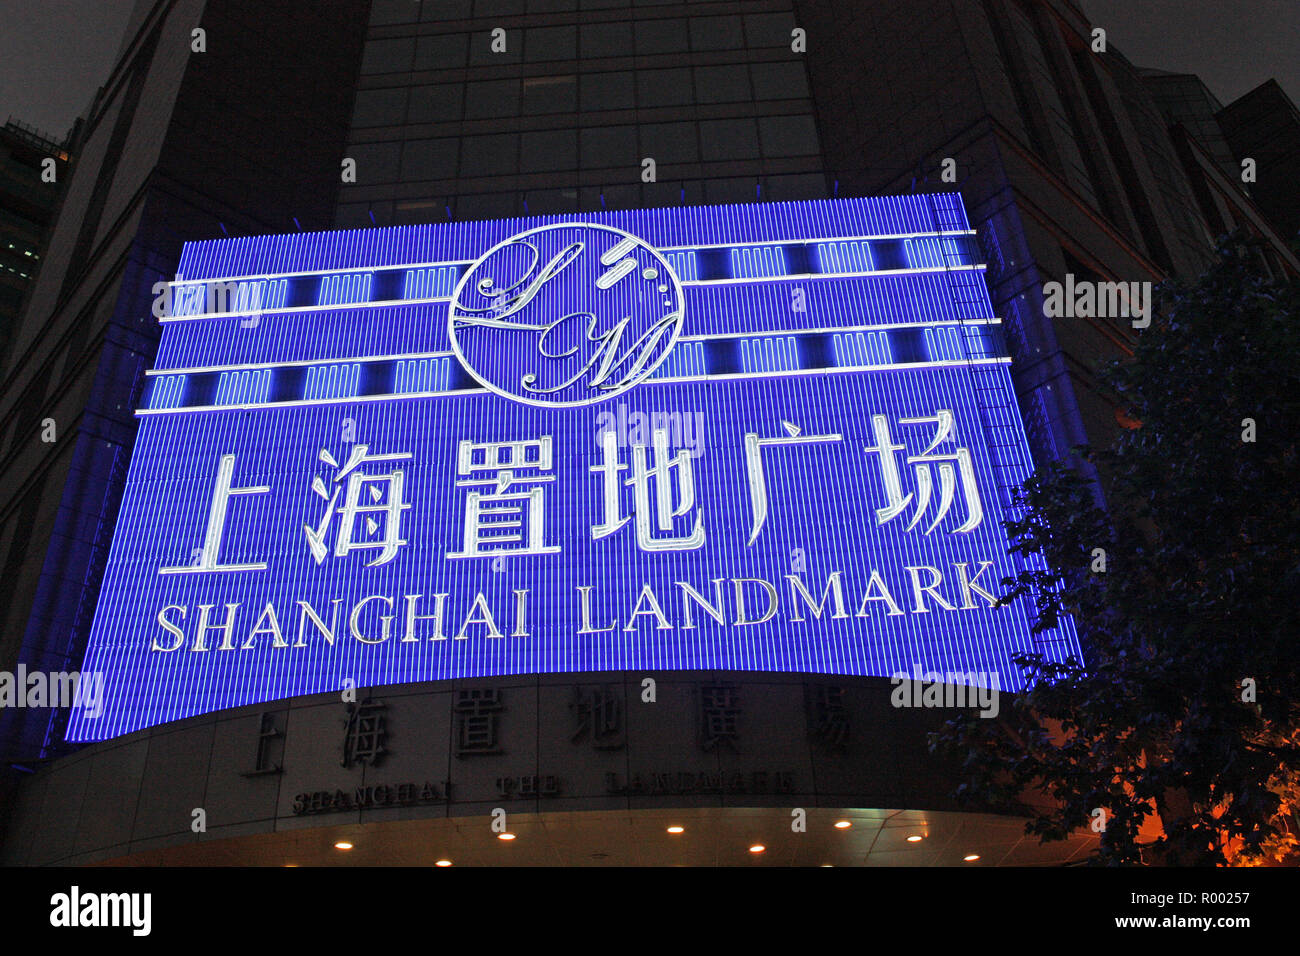 Shanghai Landmark department store illumatee sign at night, Nanjing Road, Shanghai, China Stock Photo